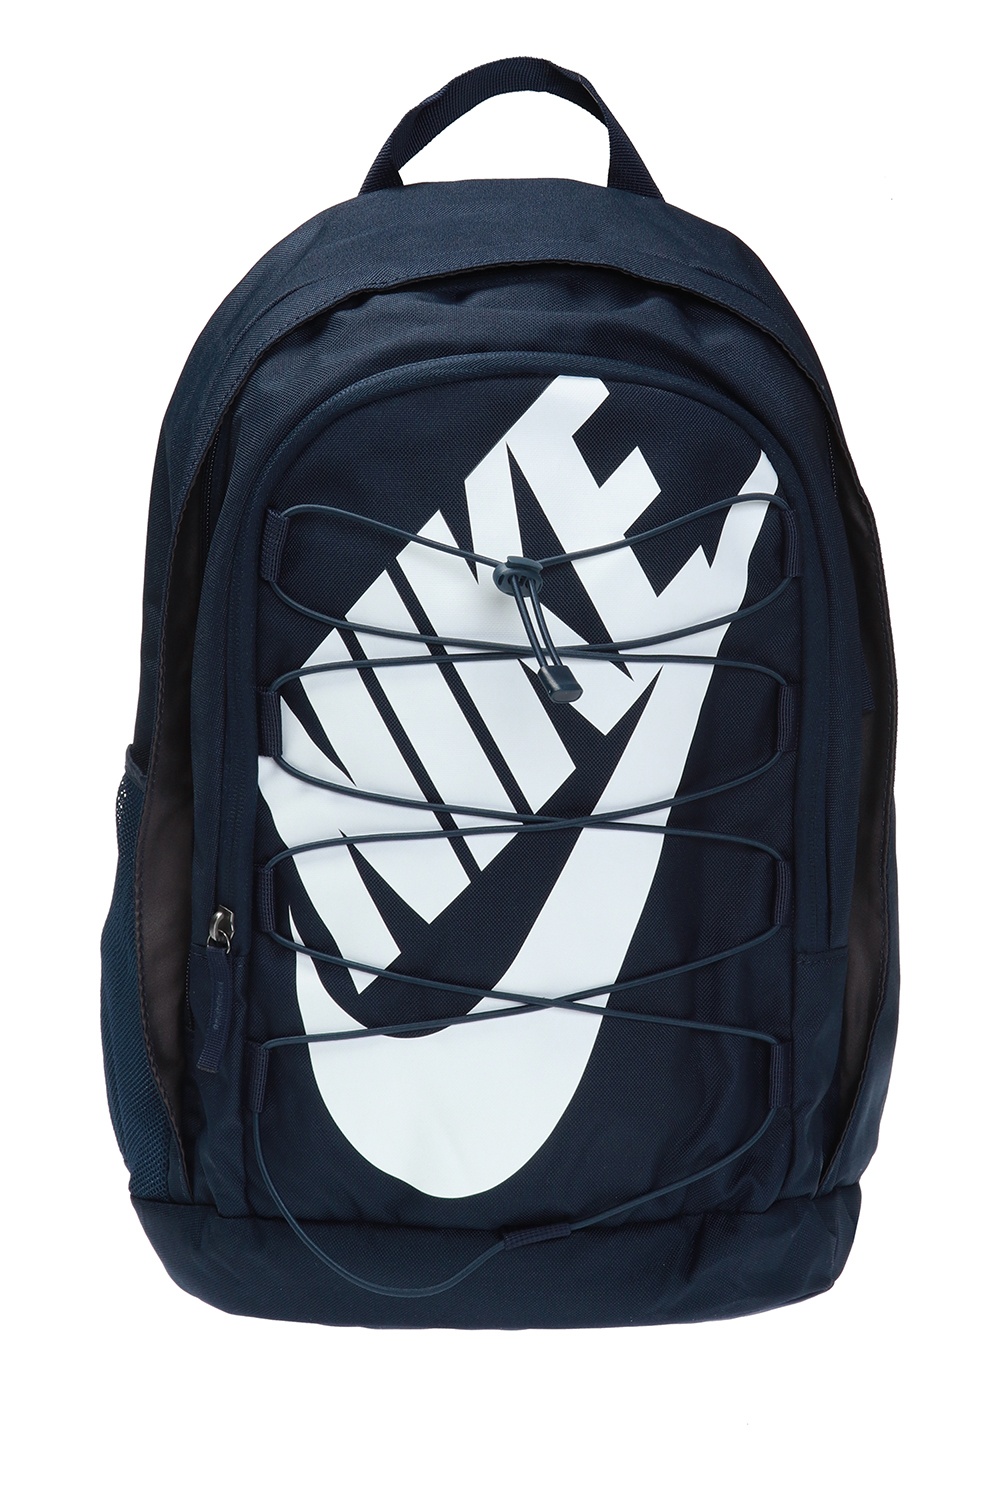 Hayward' backpack with logo Nike 